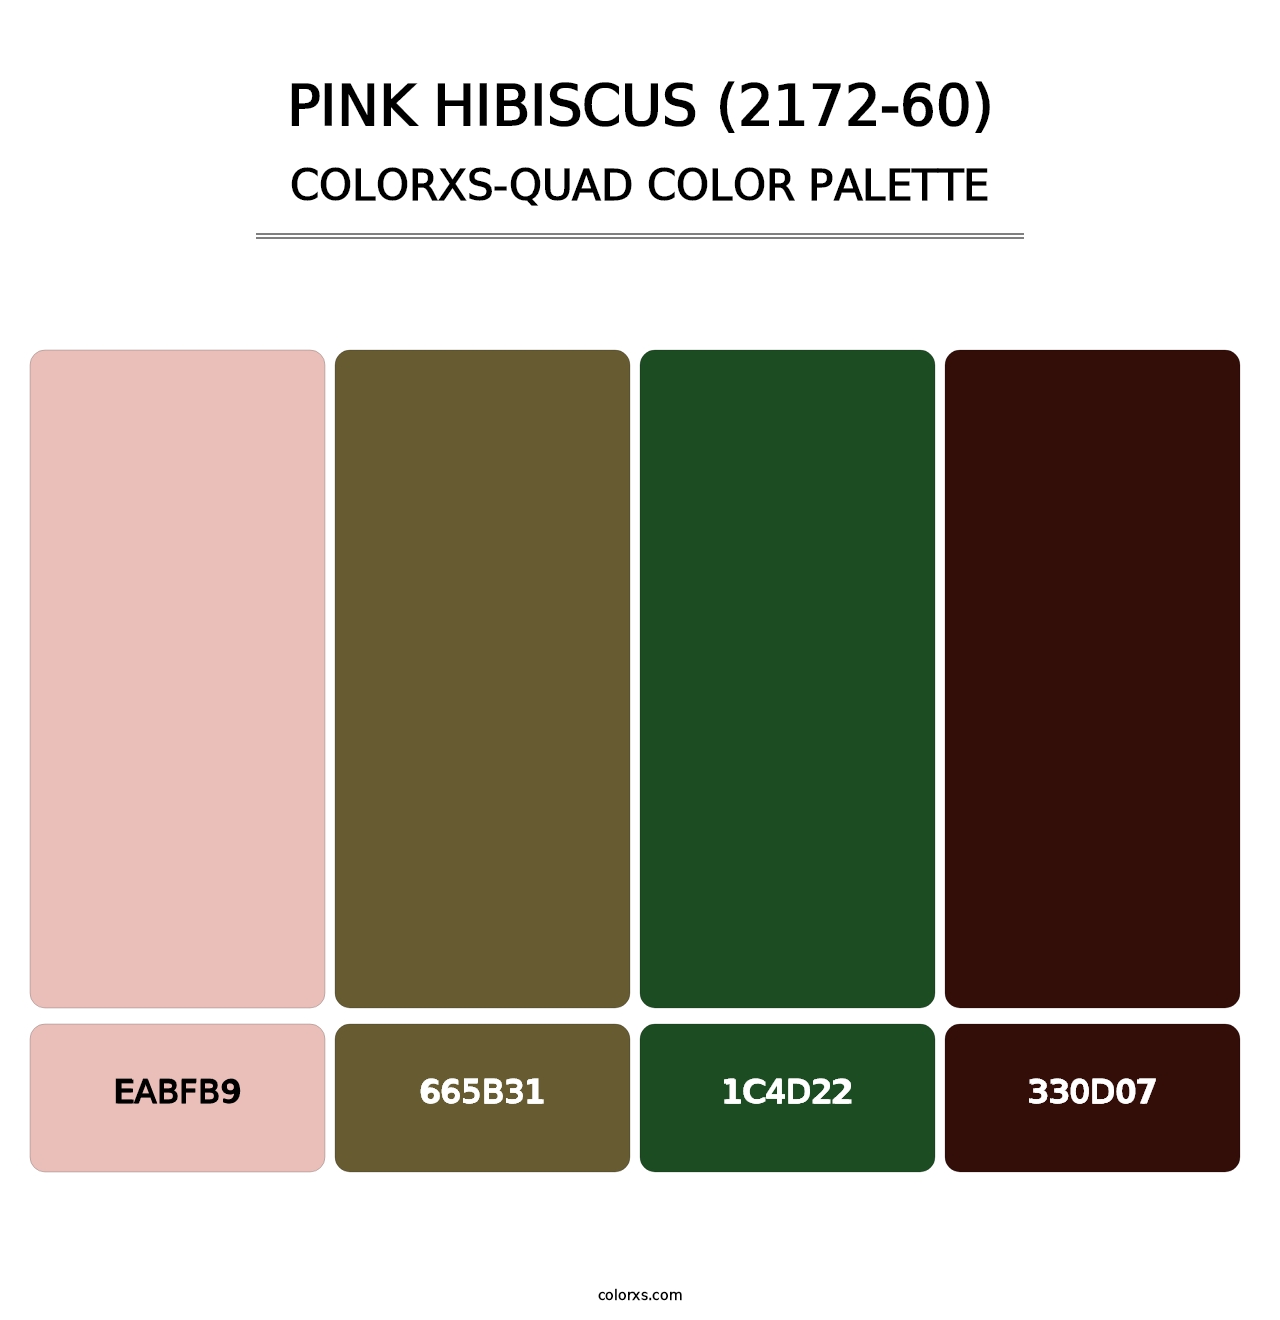 Pink Hibiscus (2172-60) - Colorxs Quad Palette